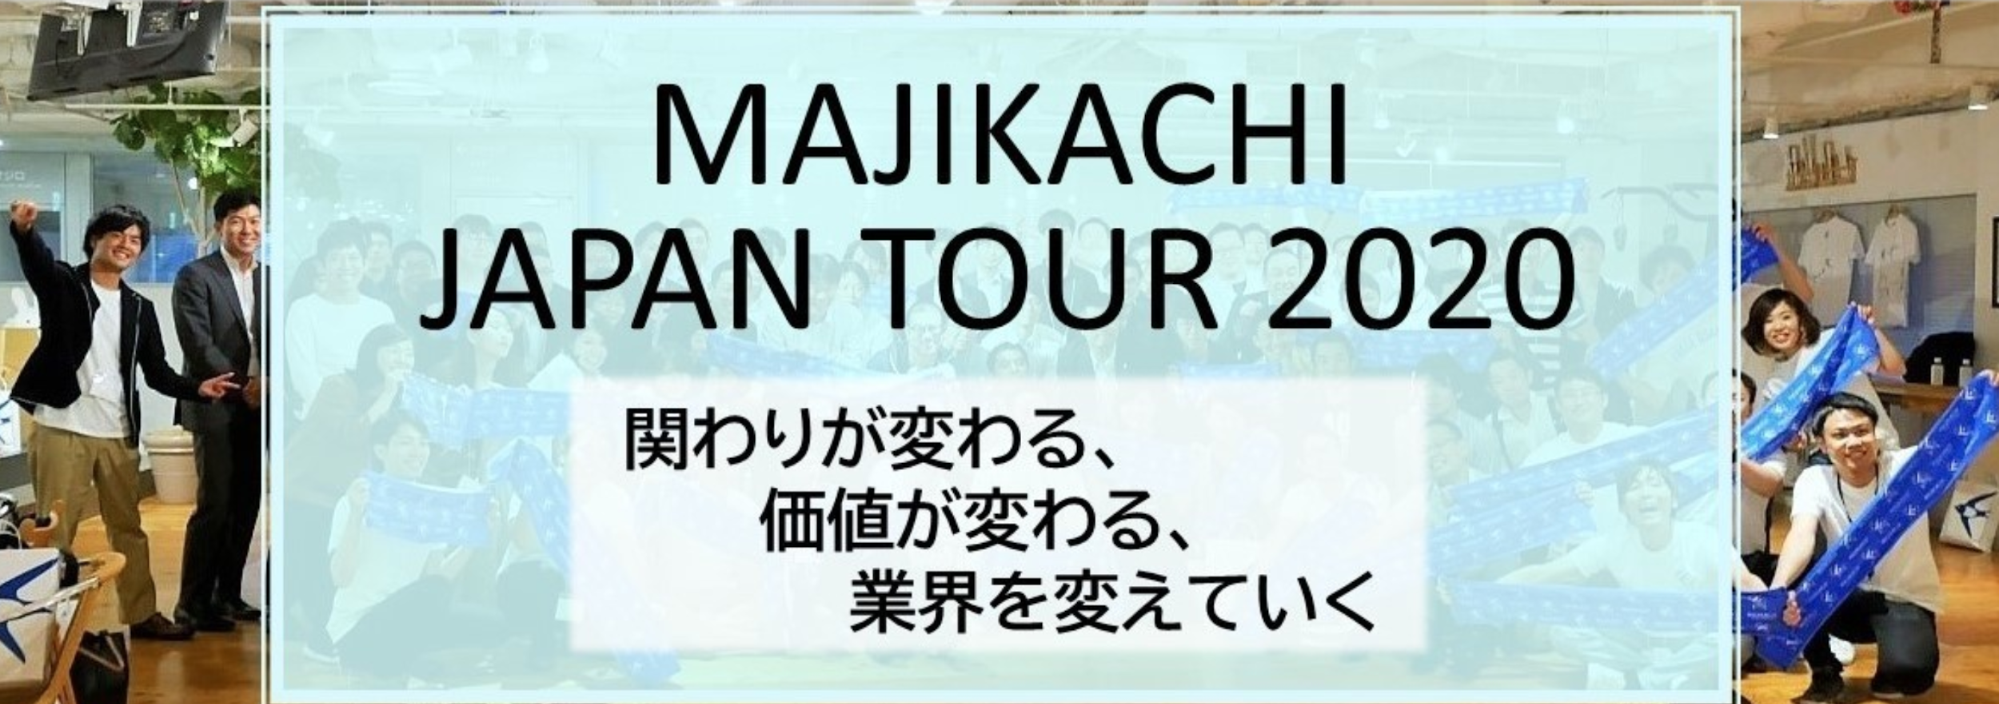 MAJIKACHI JAPAN TOUR 2020 ONLINE